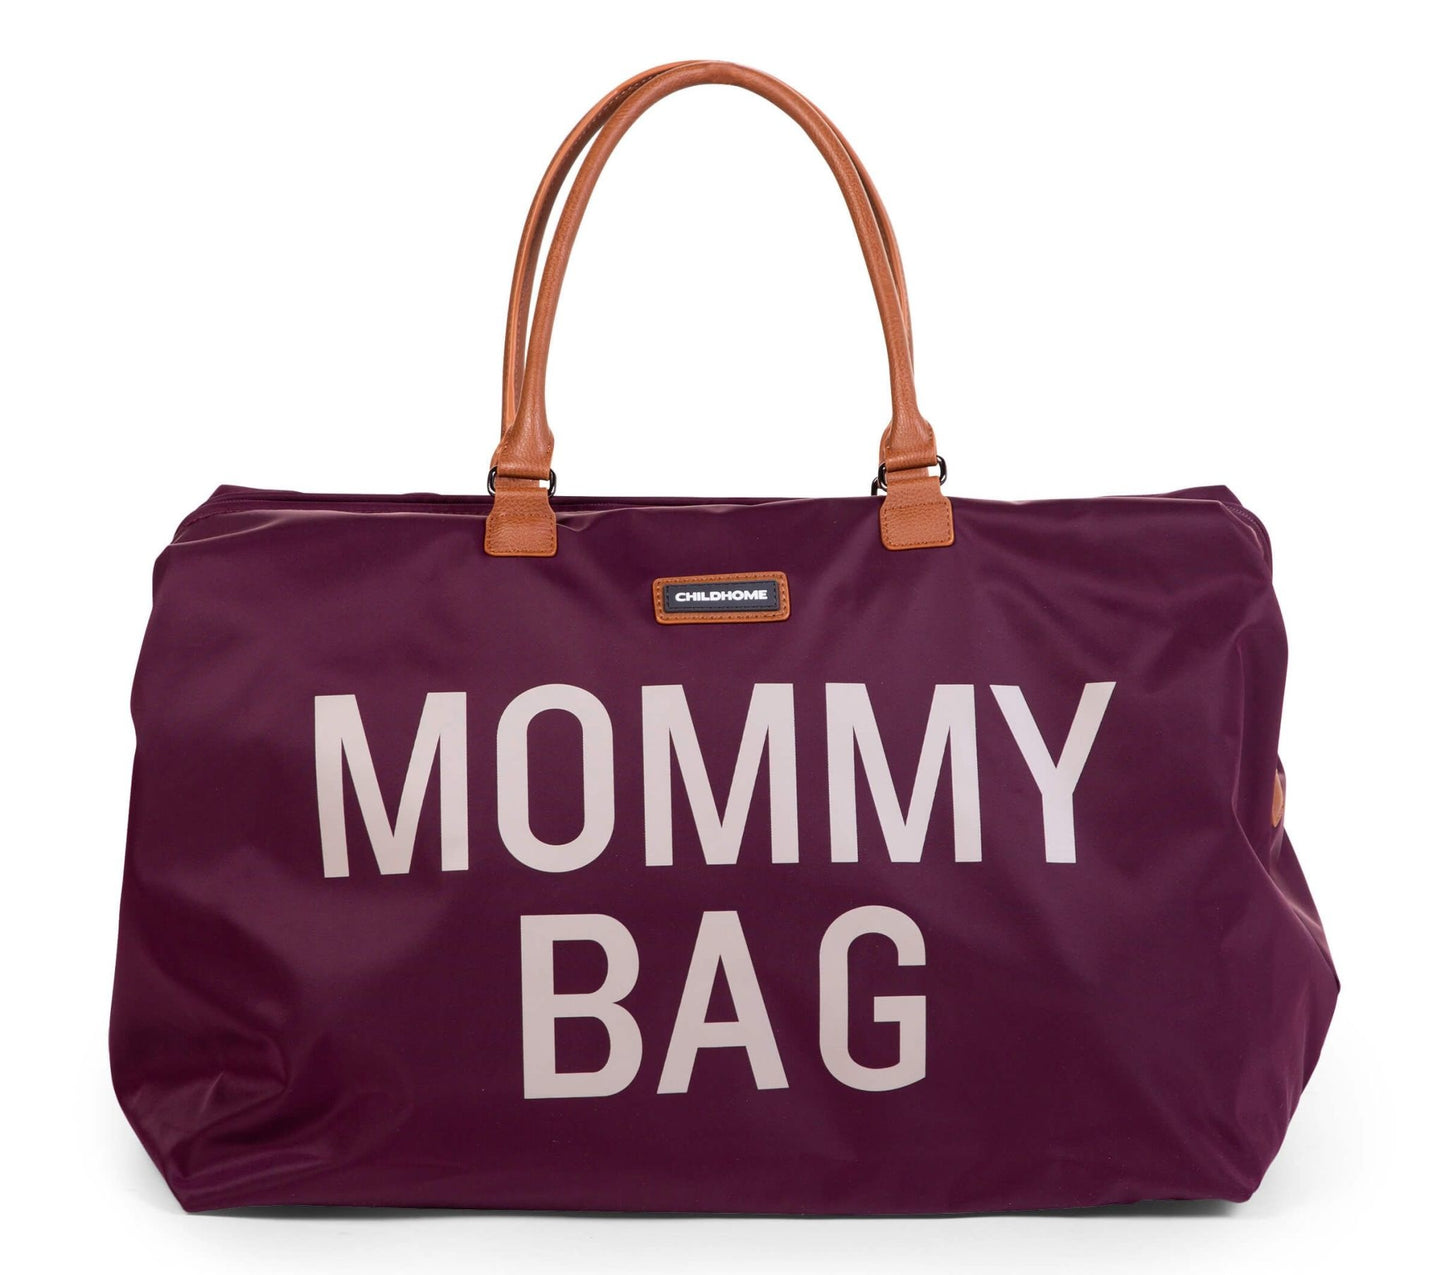 Mommy Bag Verzorgingstas - Aubergine